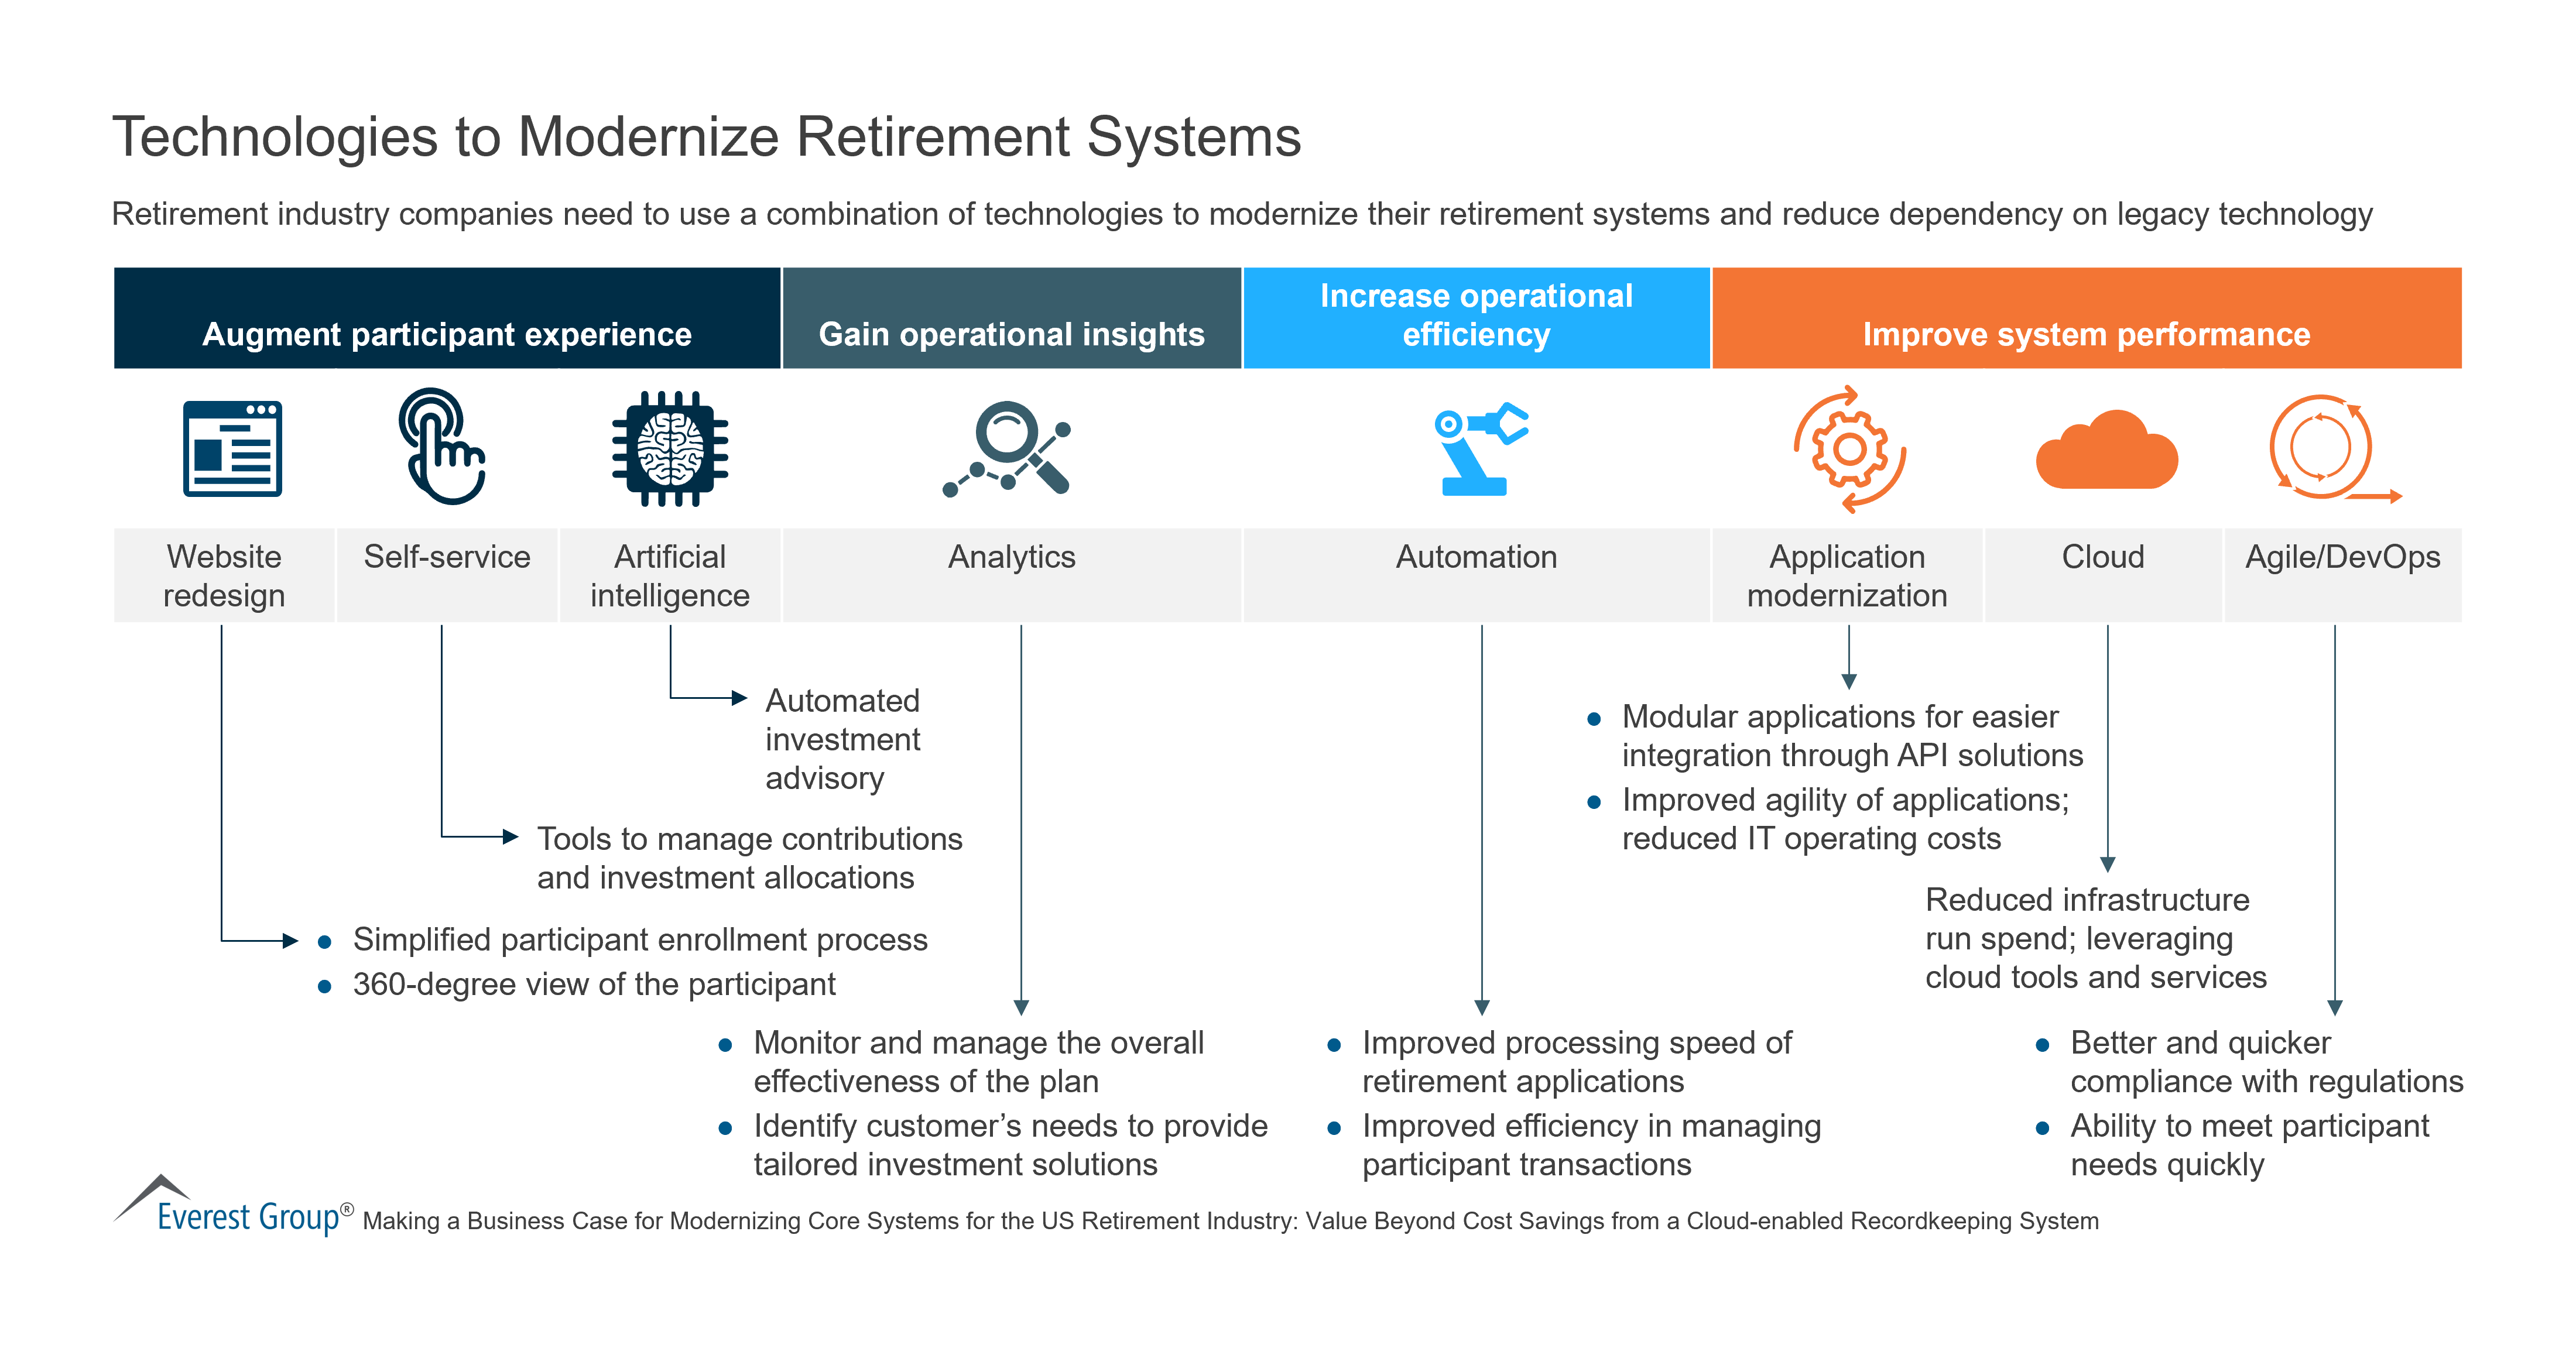 Technologies to Modernize Retirement Systems